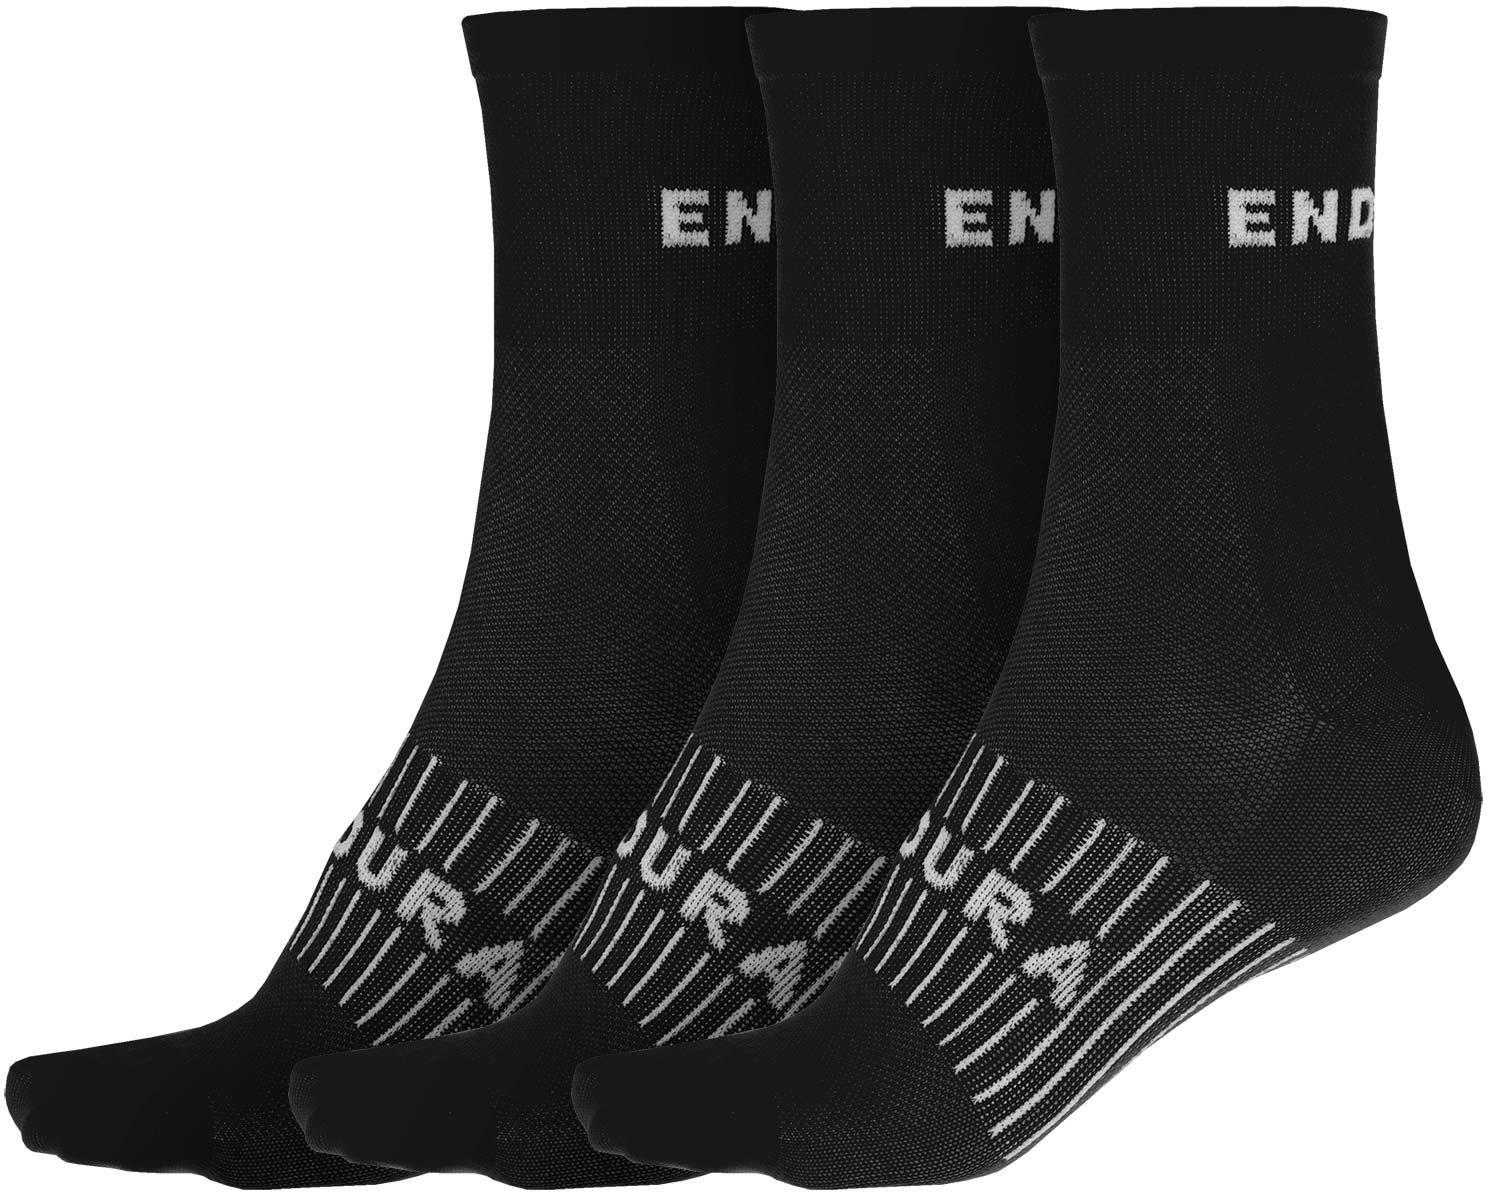 Endura Coolmax Race Socks (3-pack) - Black